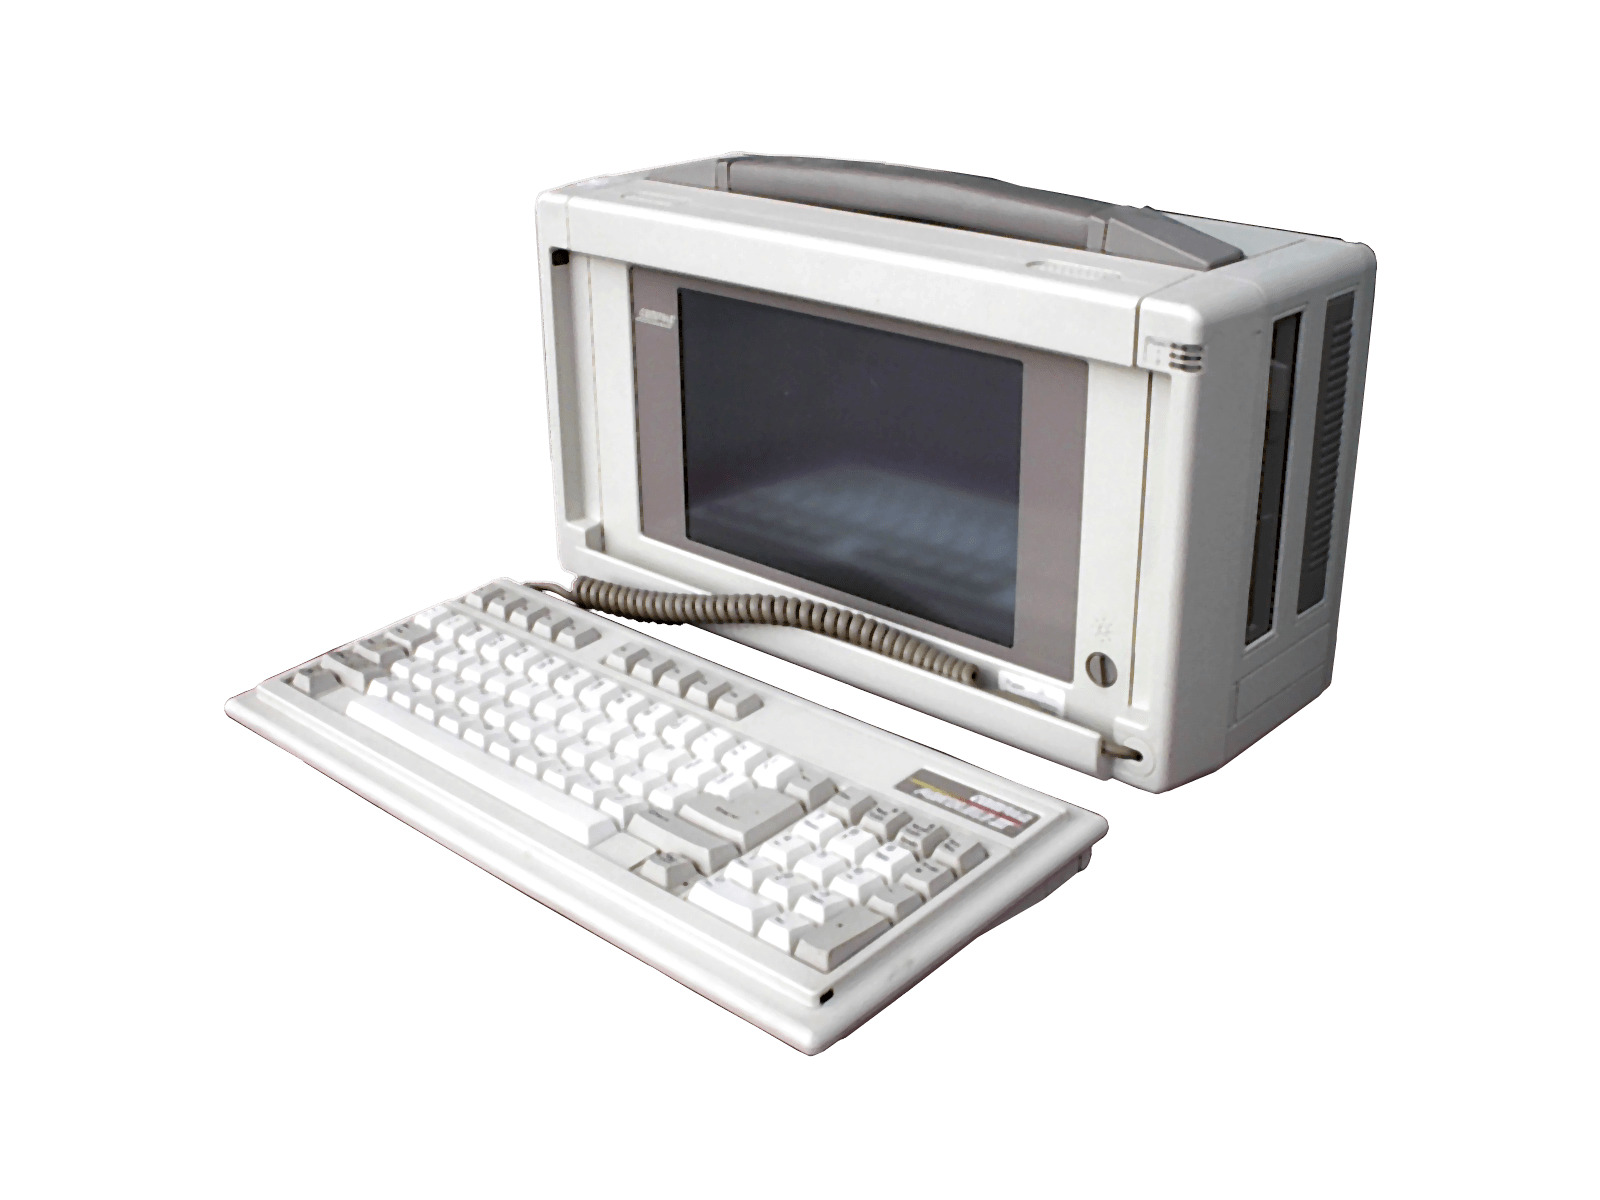 Compaq Vintage Computer icons